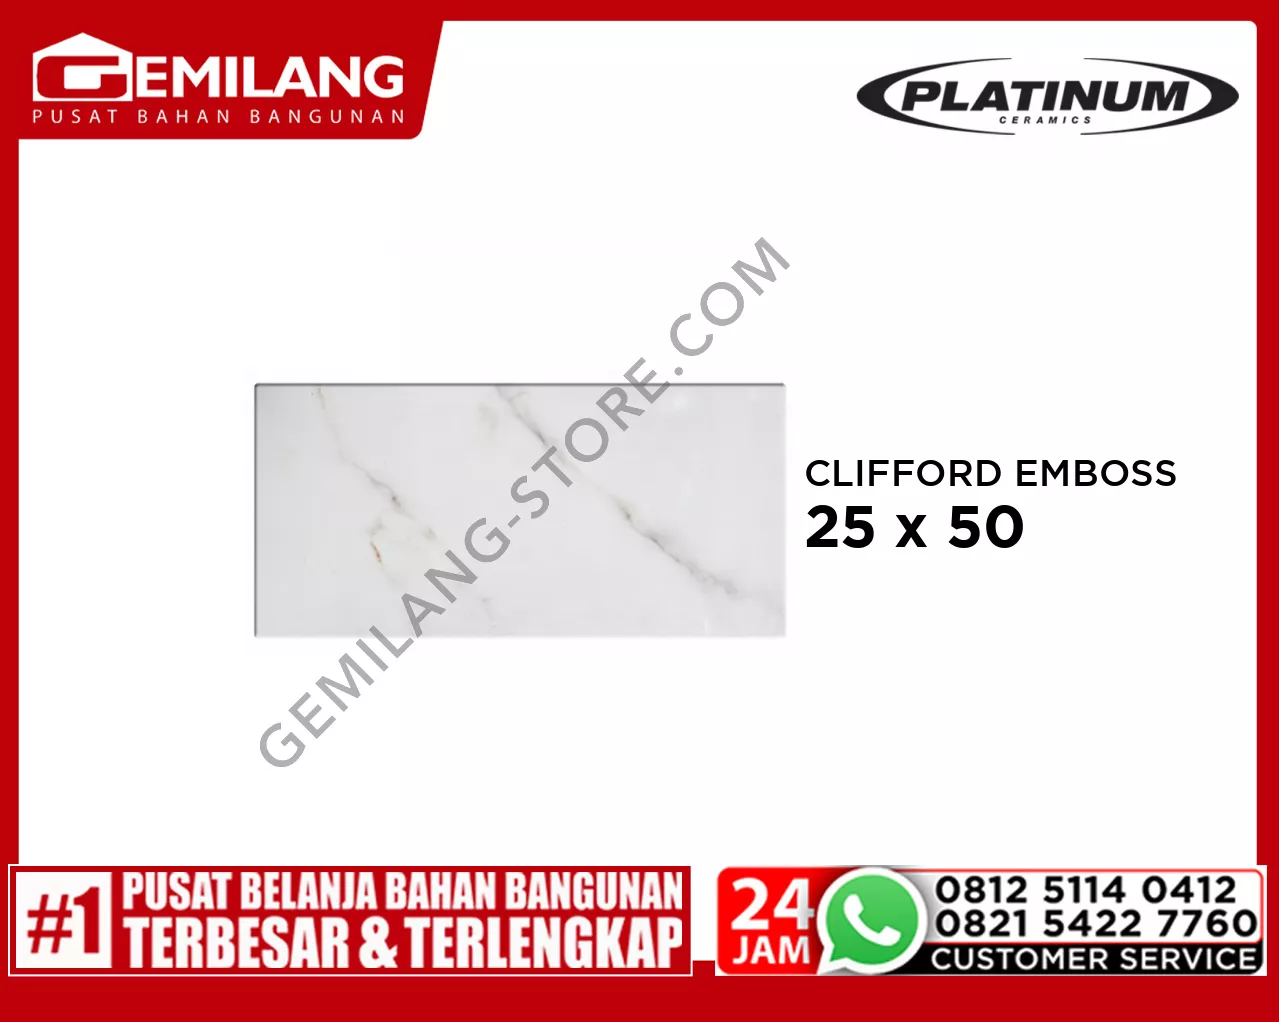 PLATINUM CLIFFORD GREY EMBOSS 25 x 50